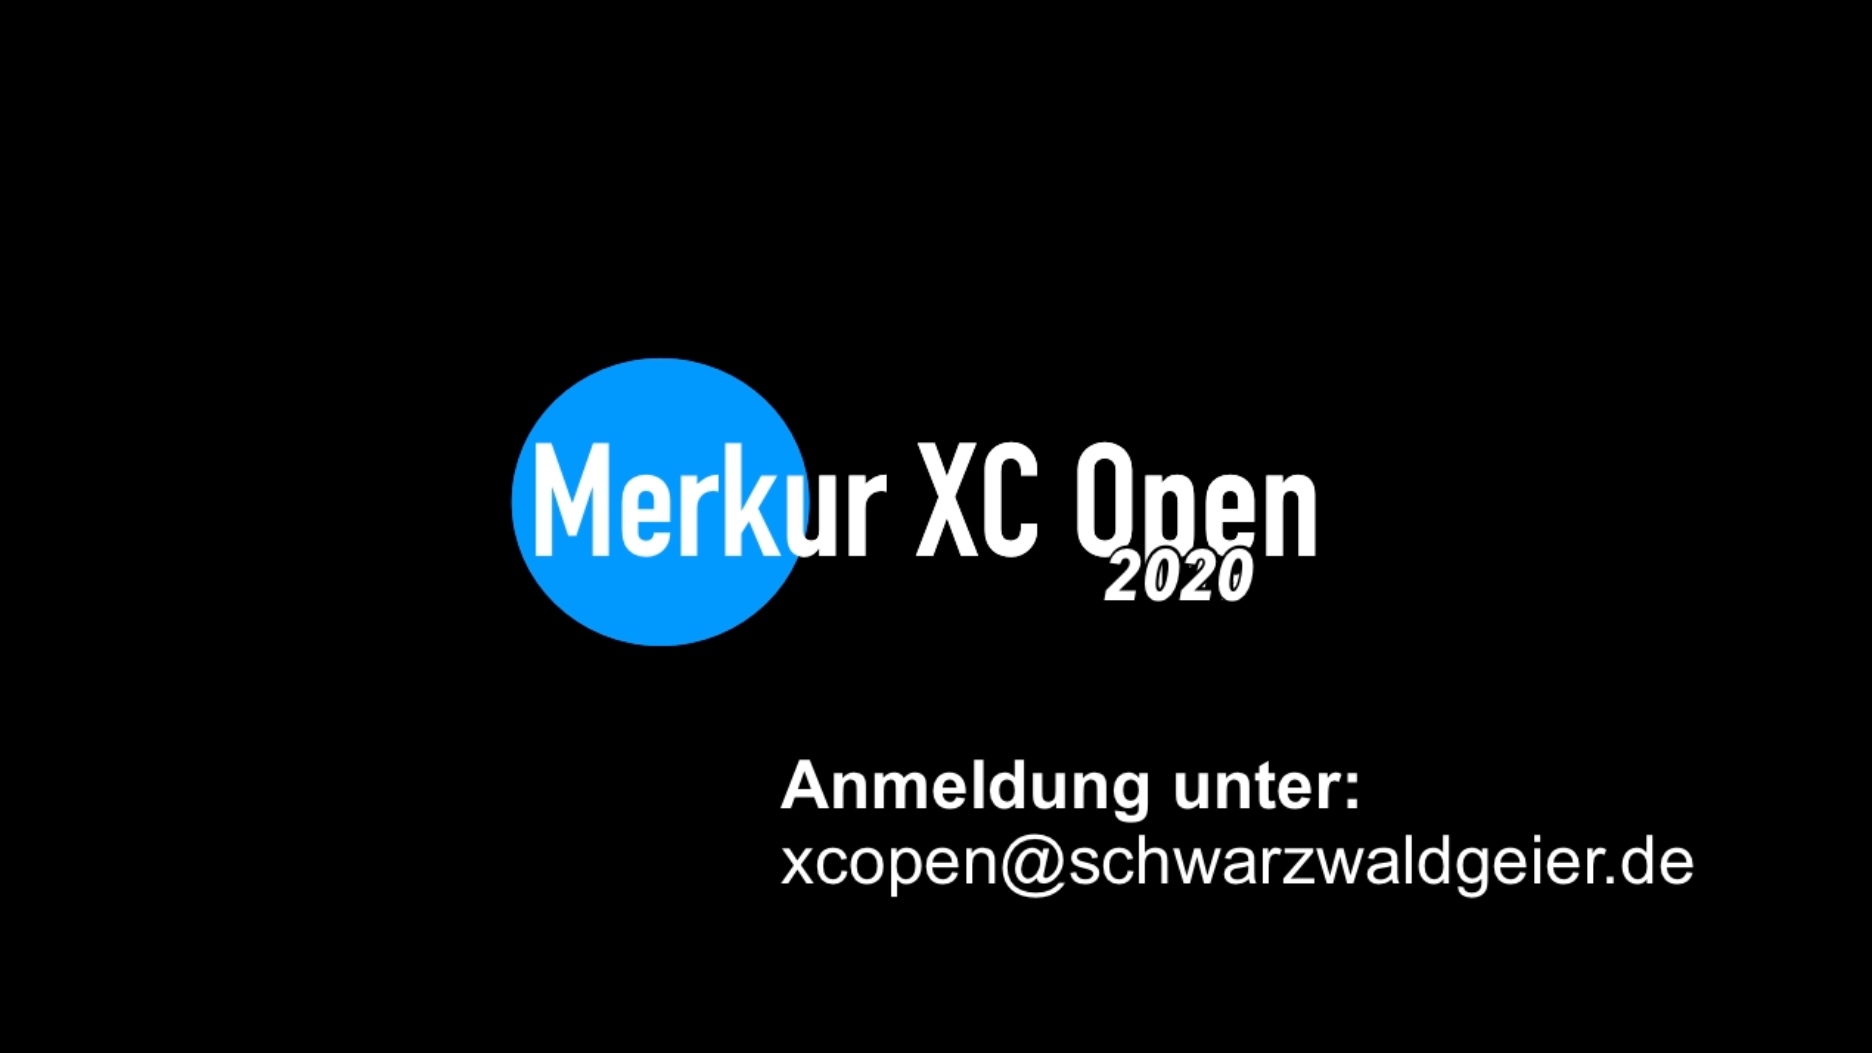 Merkur XC Open 2020